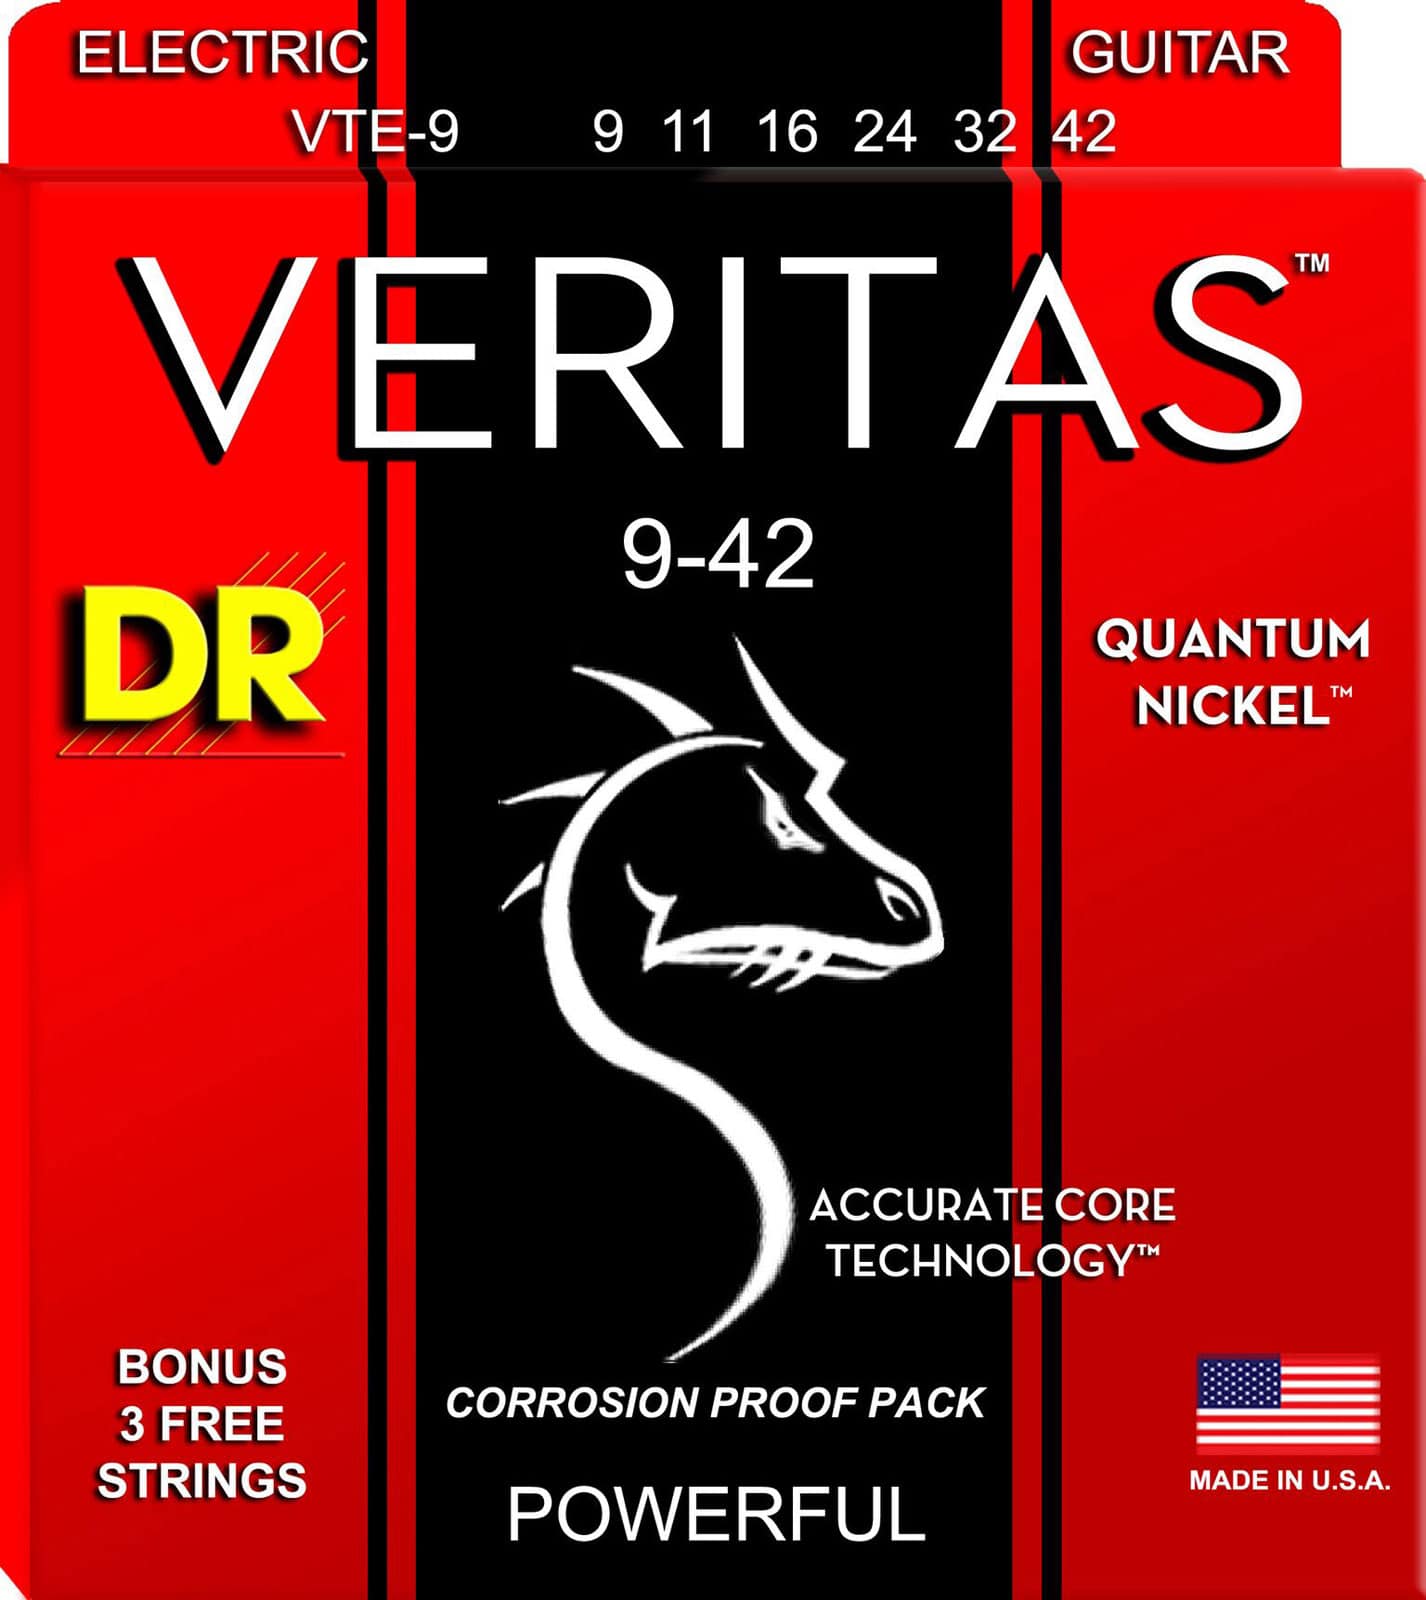 DR STRINGS VTE-9 VERITAS 9-42